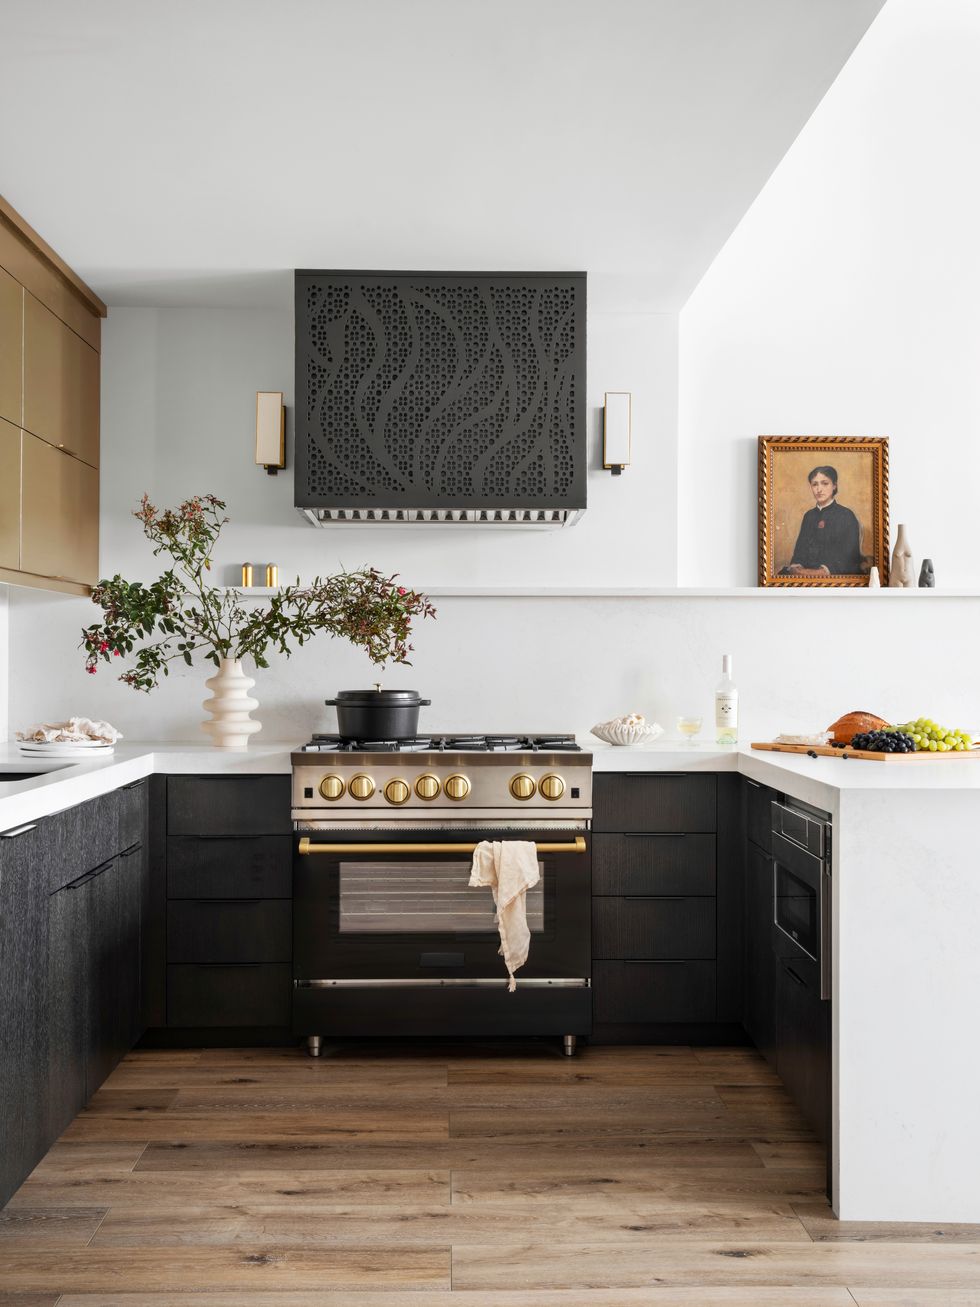 black and white kitchen ideas